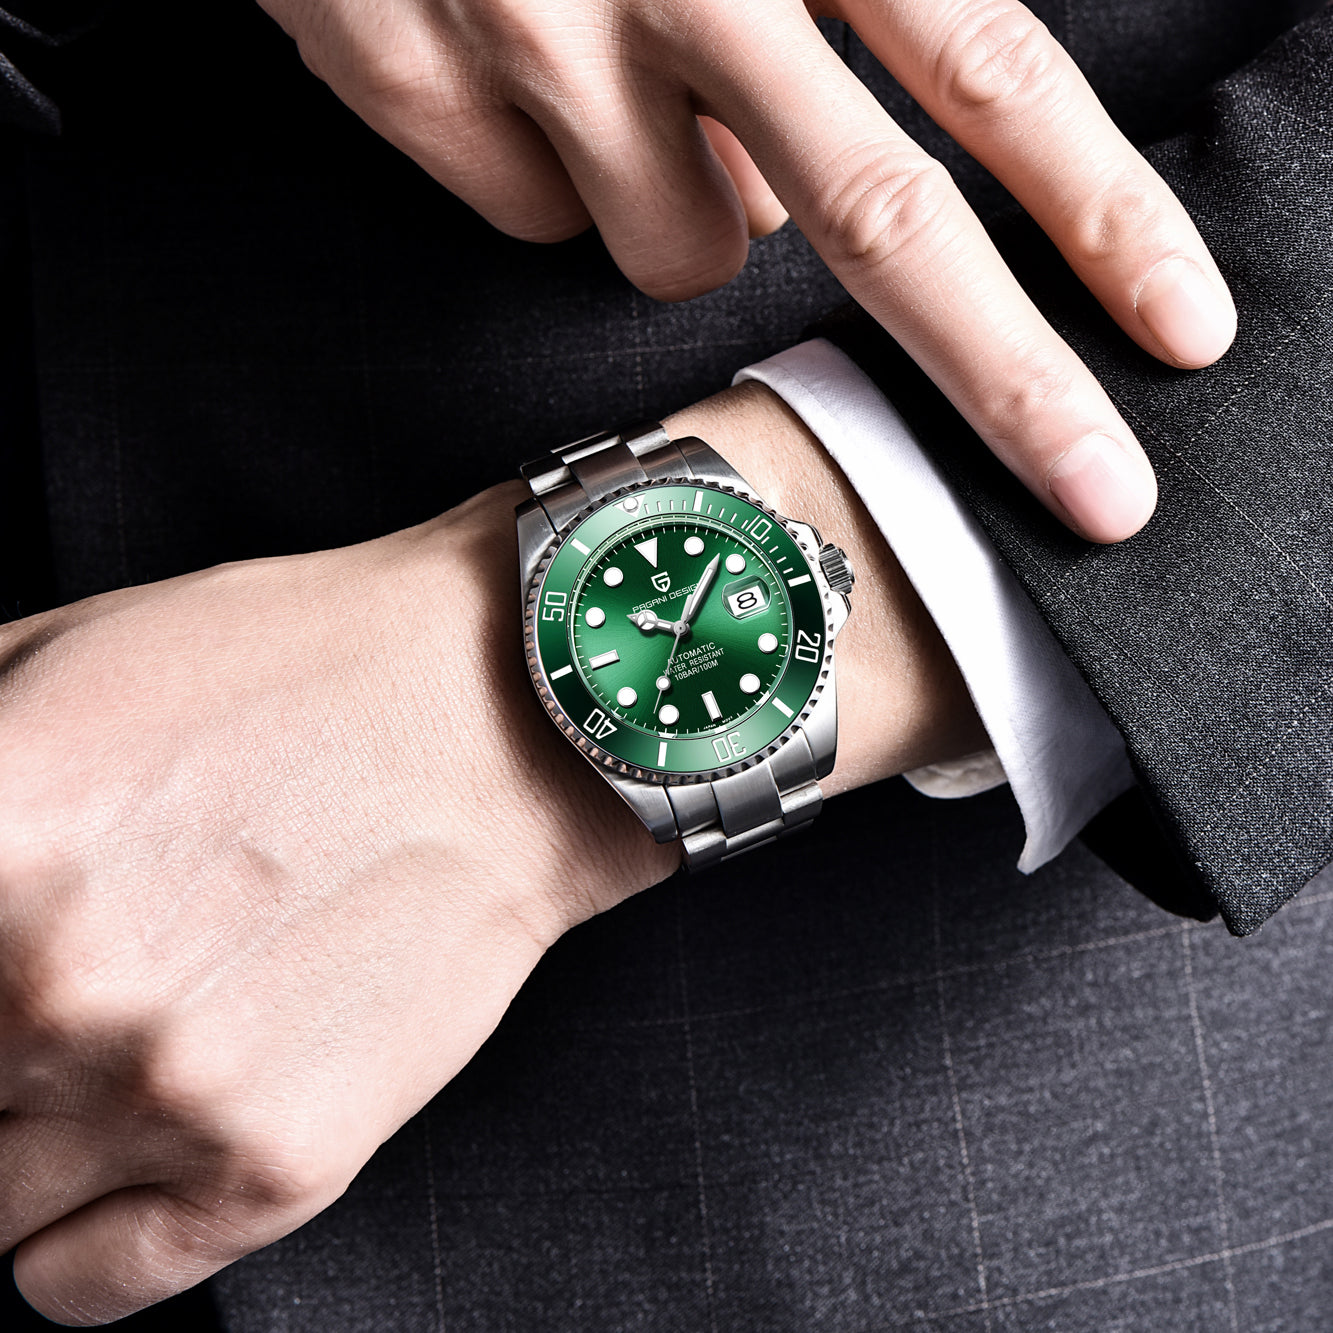 PAGANI DESIGN PD1639 Men's 42mm Business Mechanical Wristwatch NH35A Movement 100M Waterproof Sapphire Watch Mirror